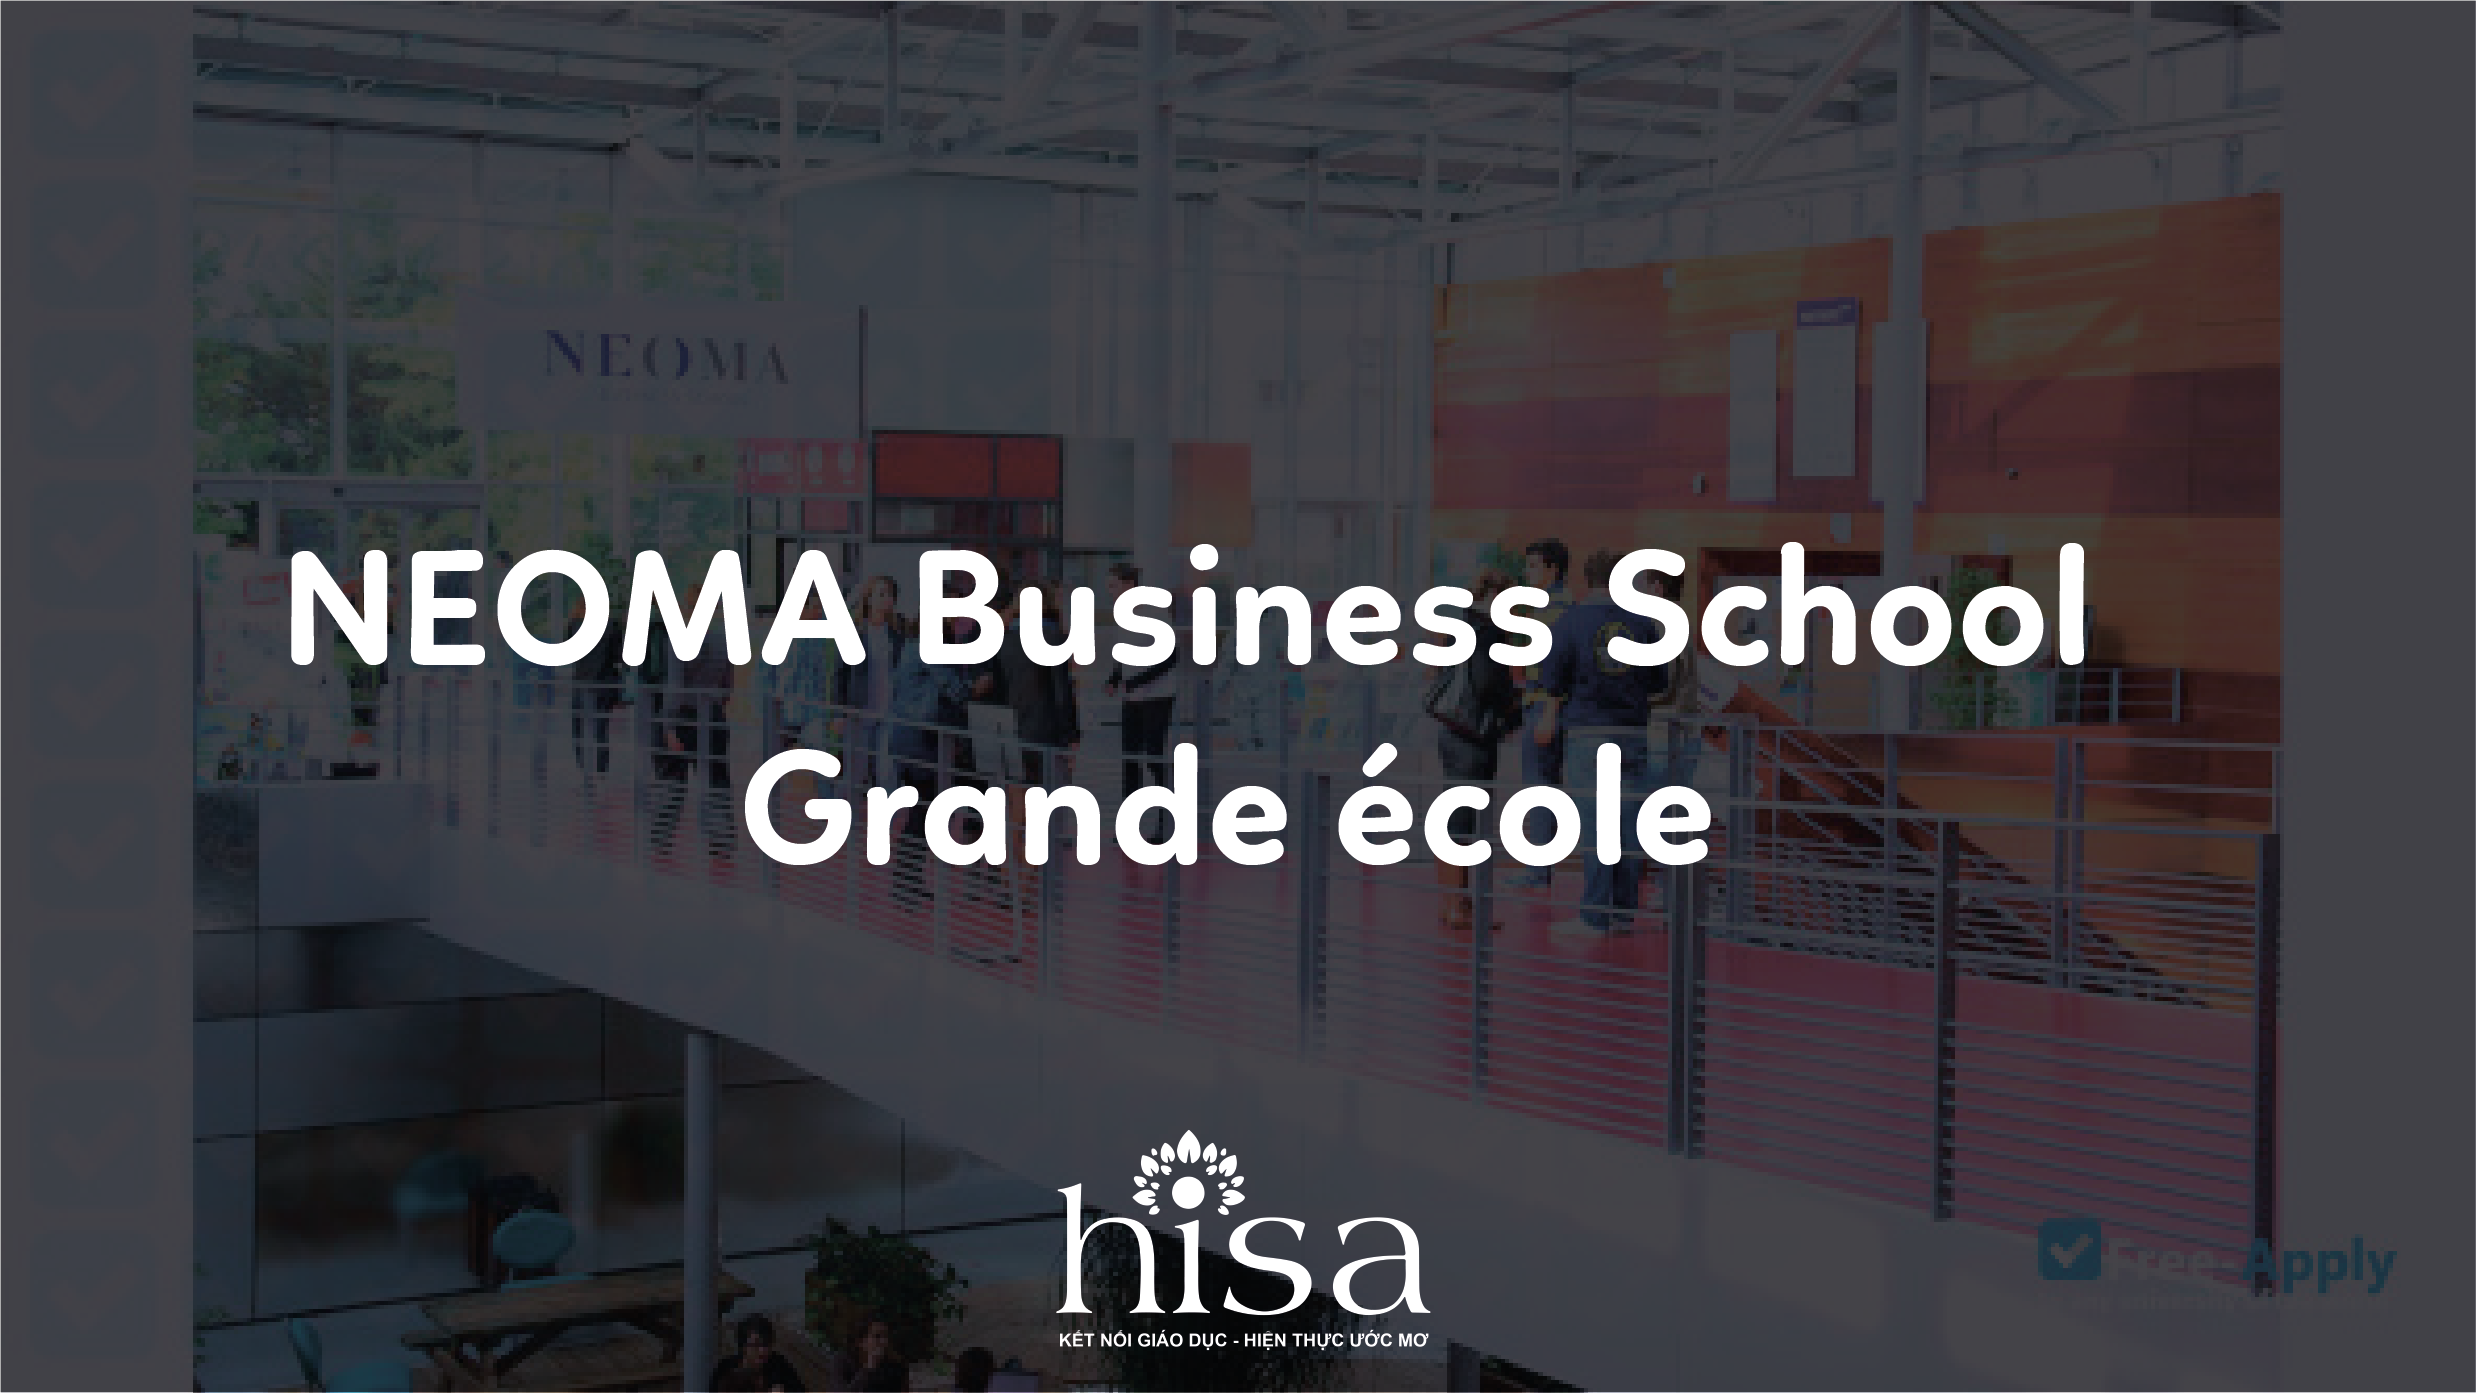 NEOMA Business School - Grande école